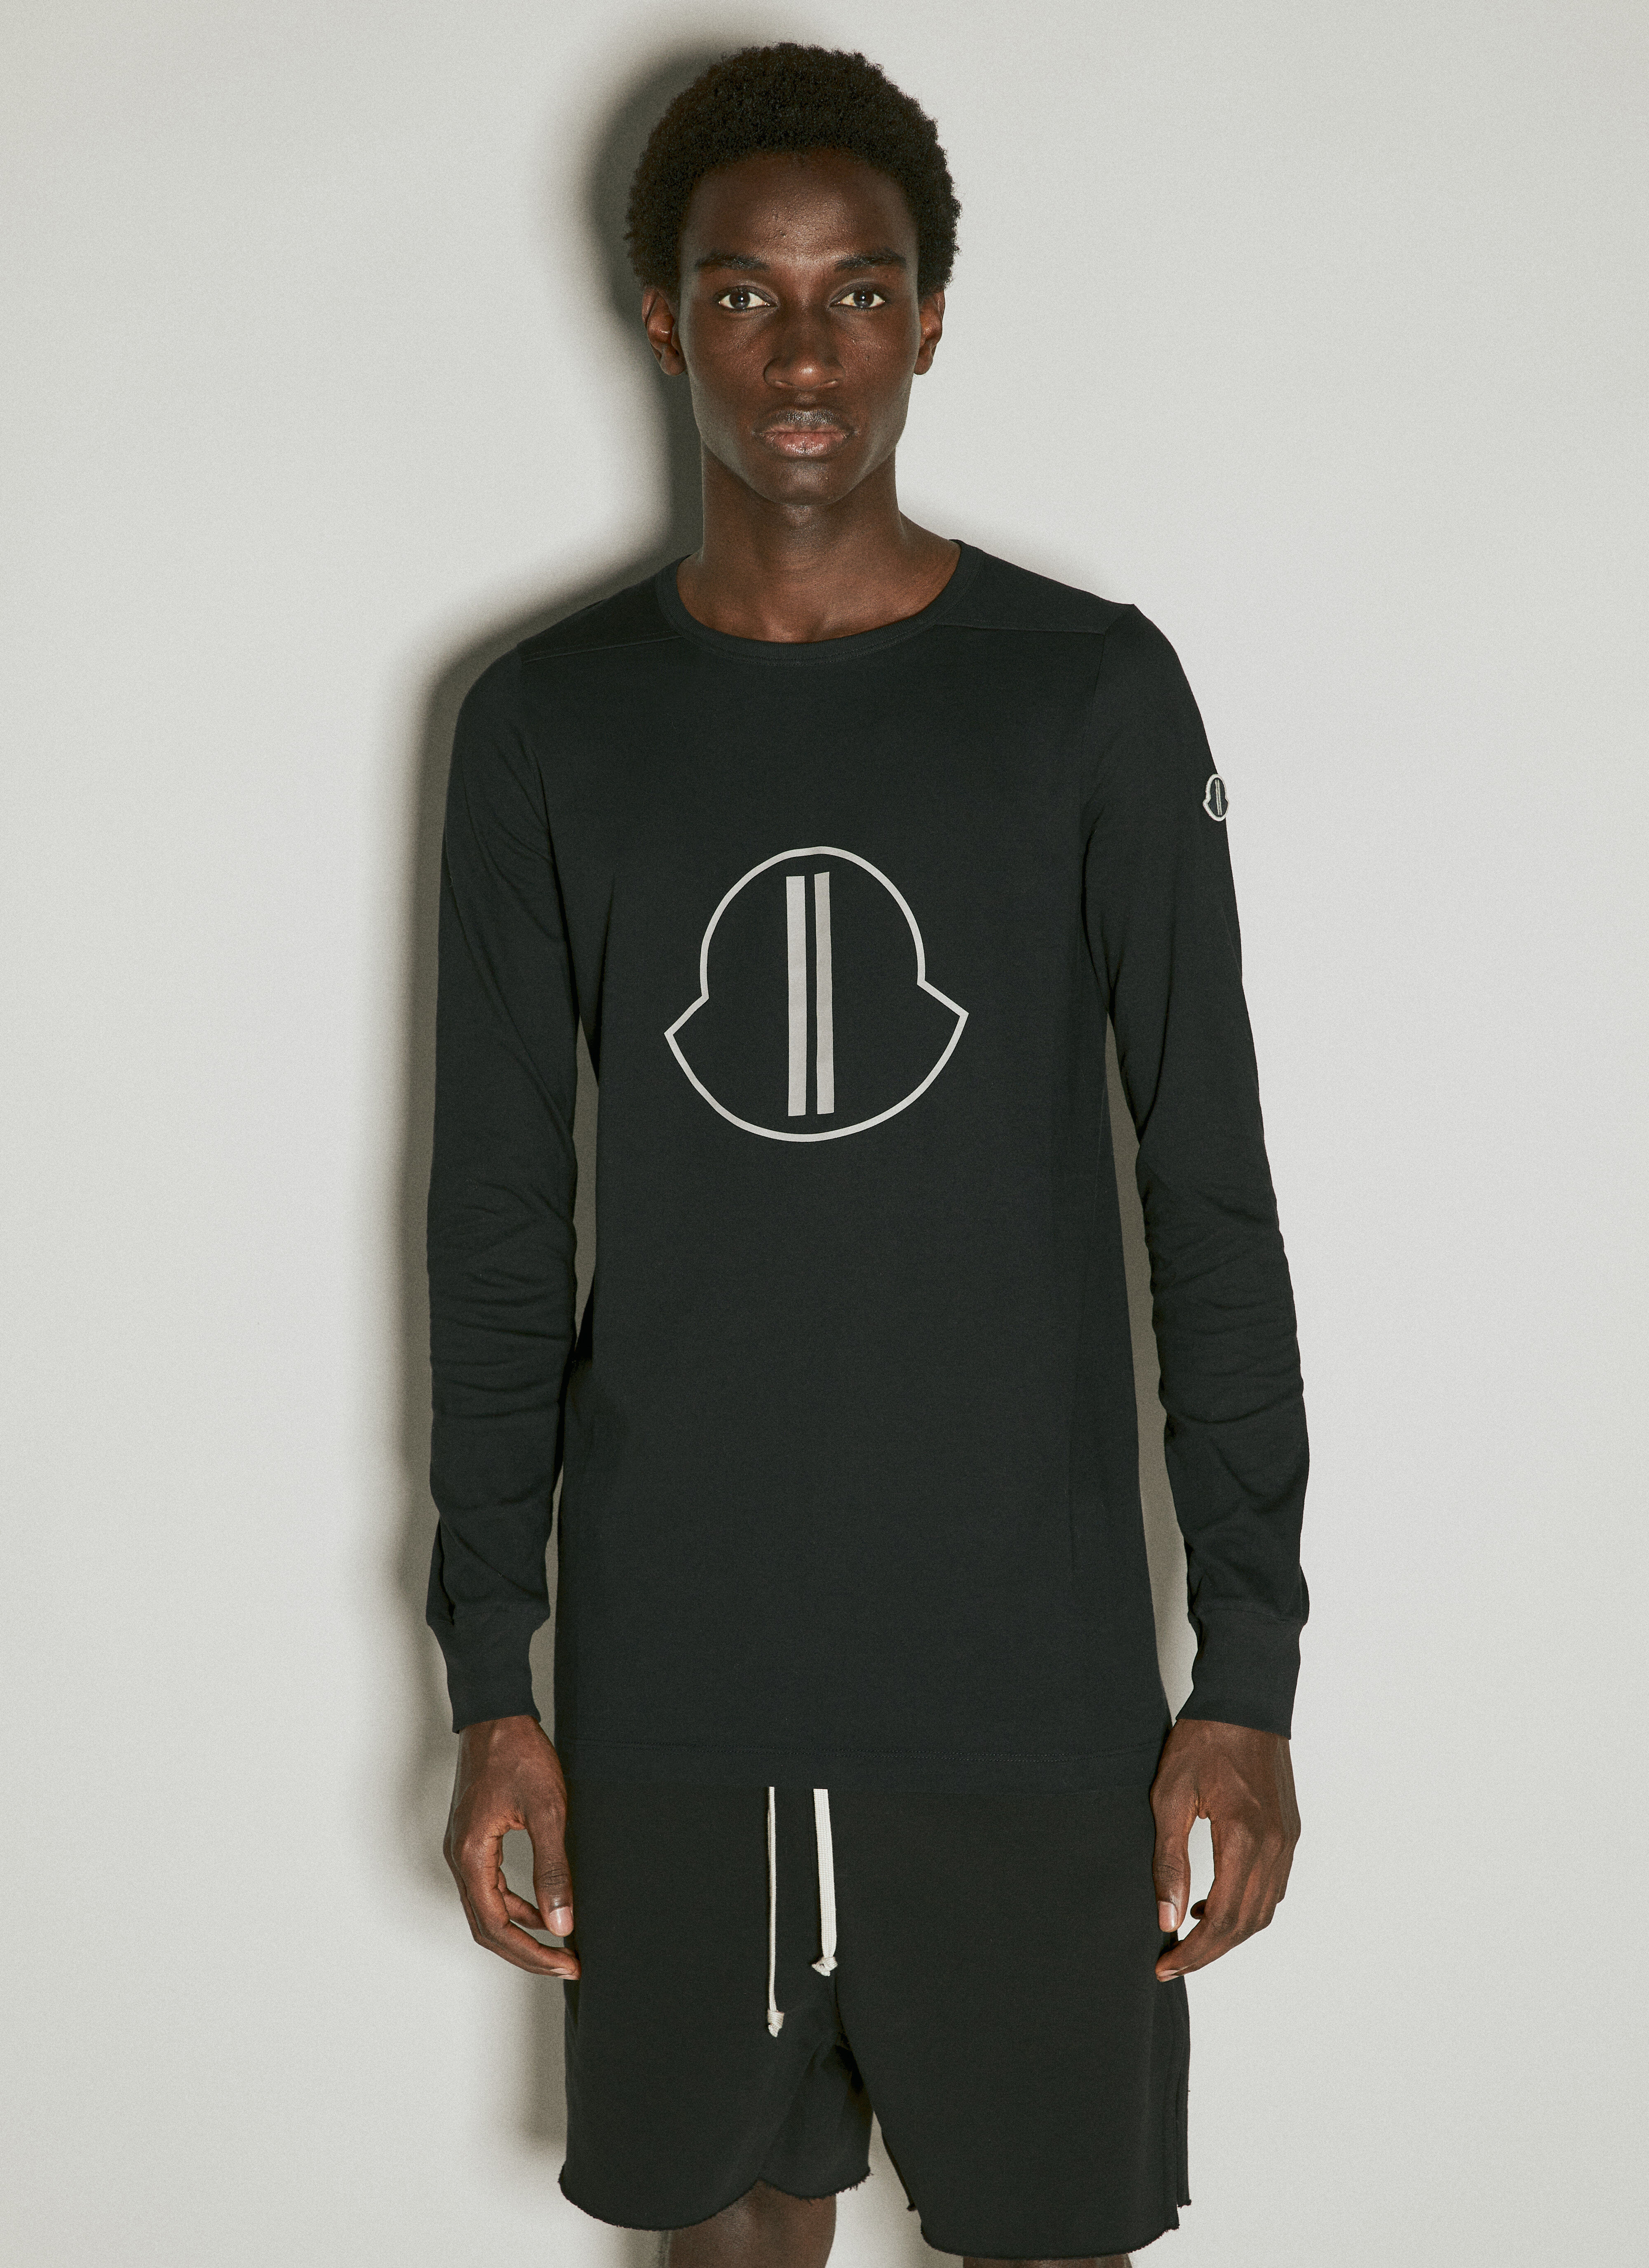 Moncler x Roc Nation designed by Jay-Z Logo Applique Long Sleeve T-Shirt Black mrn0156002